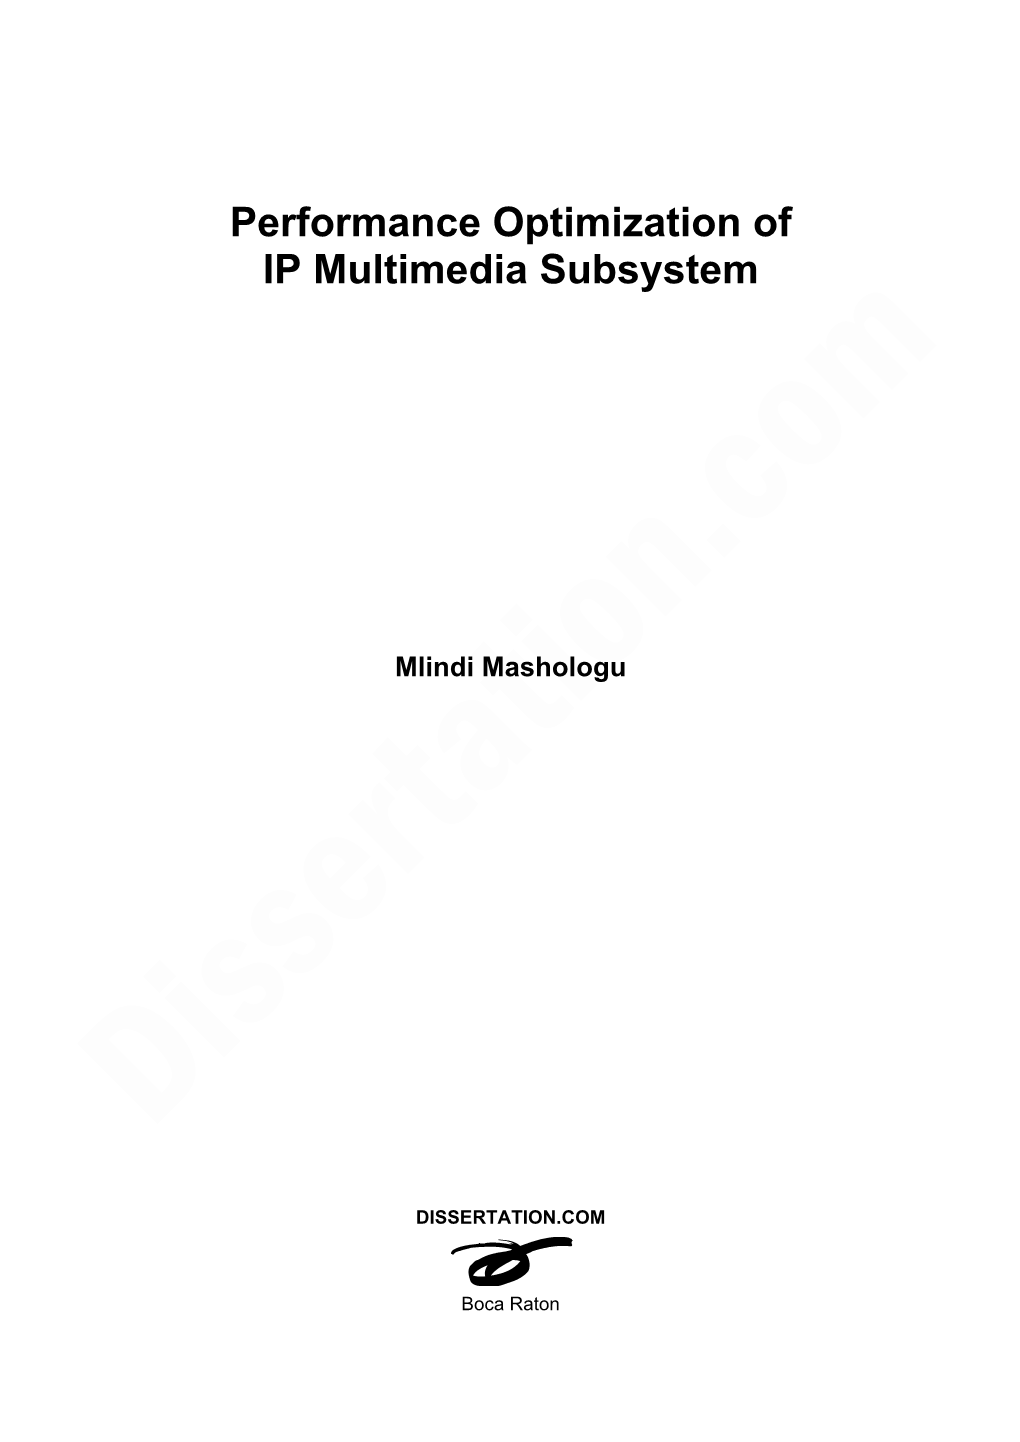 Performance Optimization of IP Multimedia Subsystem